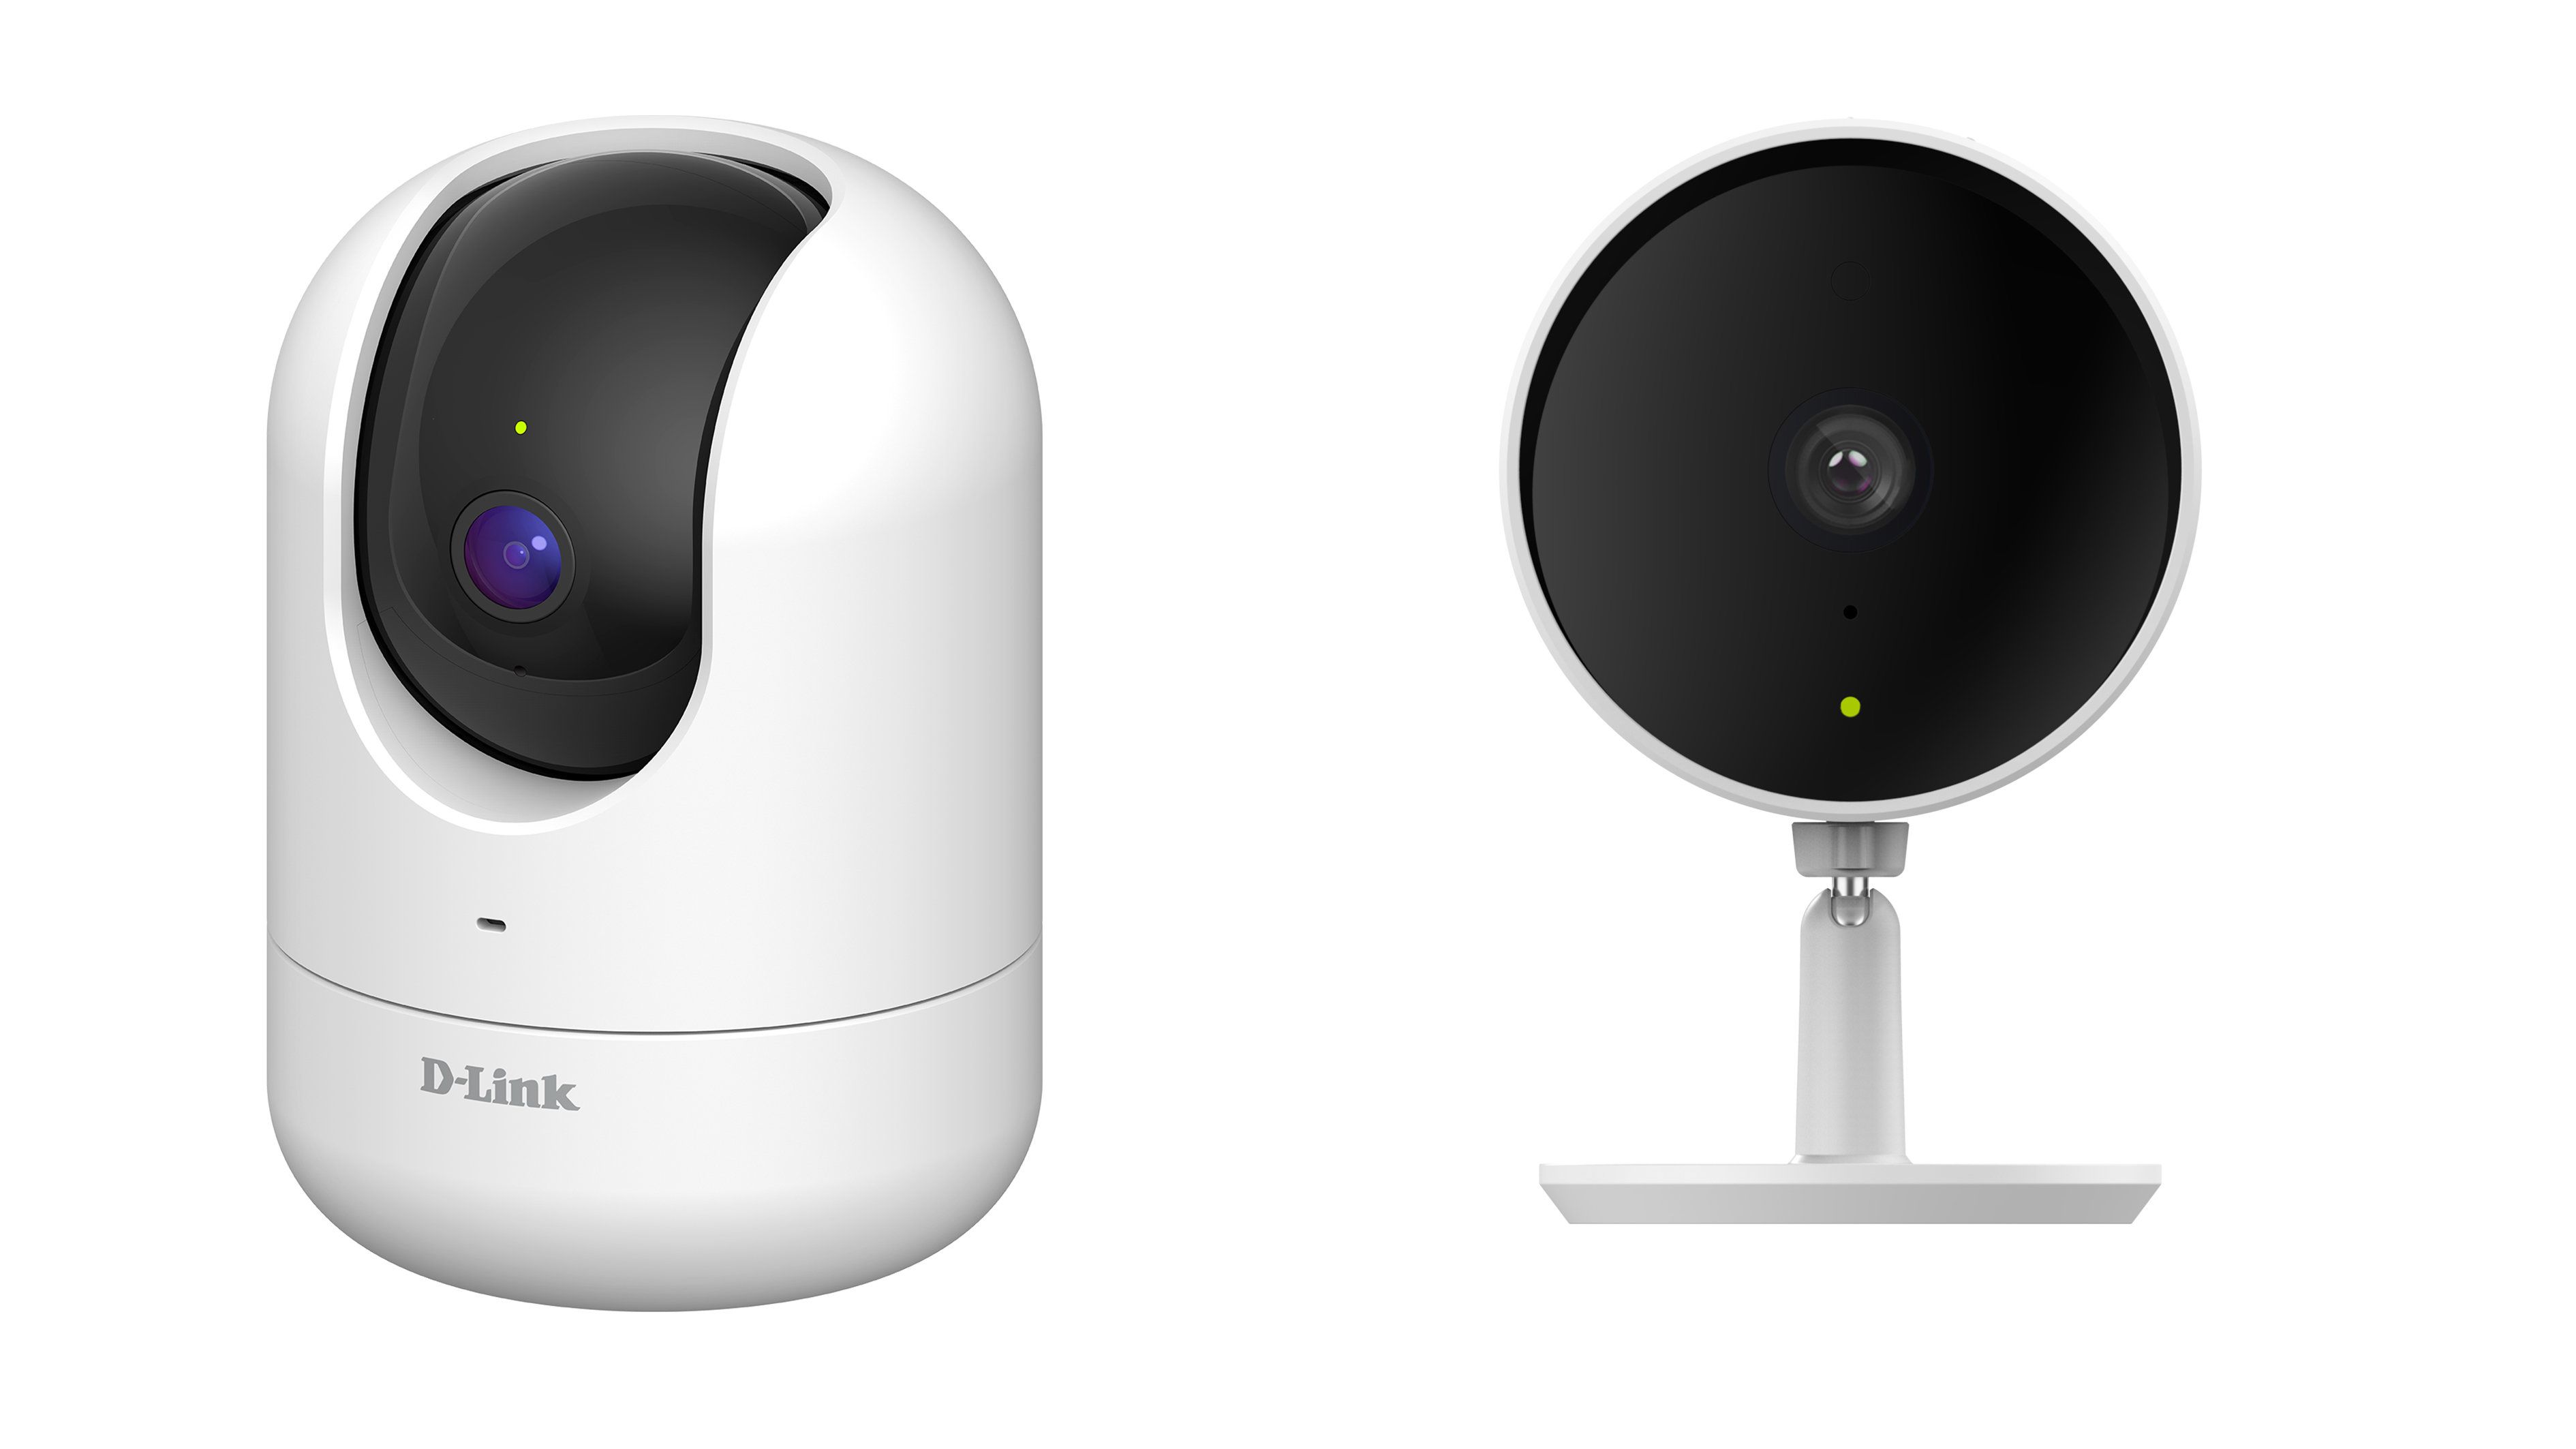 D-Link 2020 smart security cameras